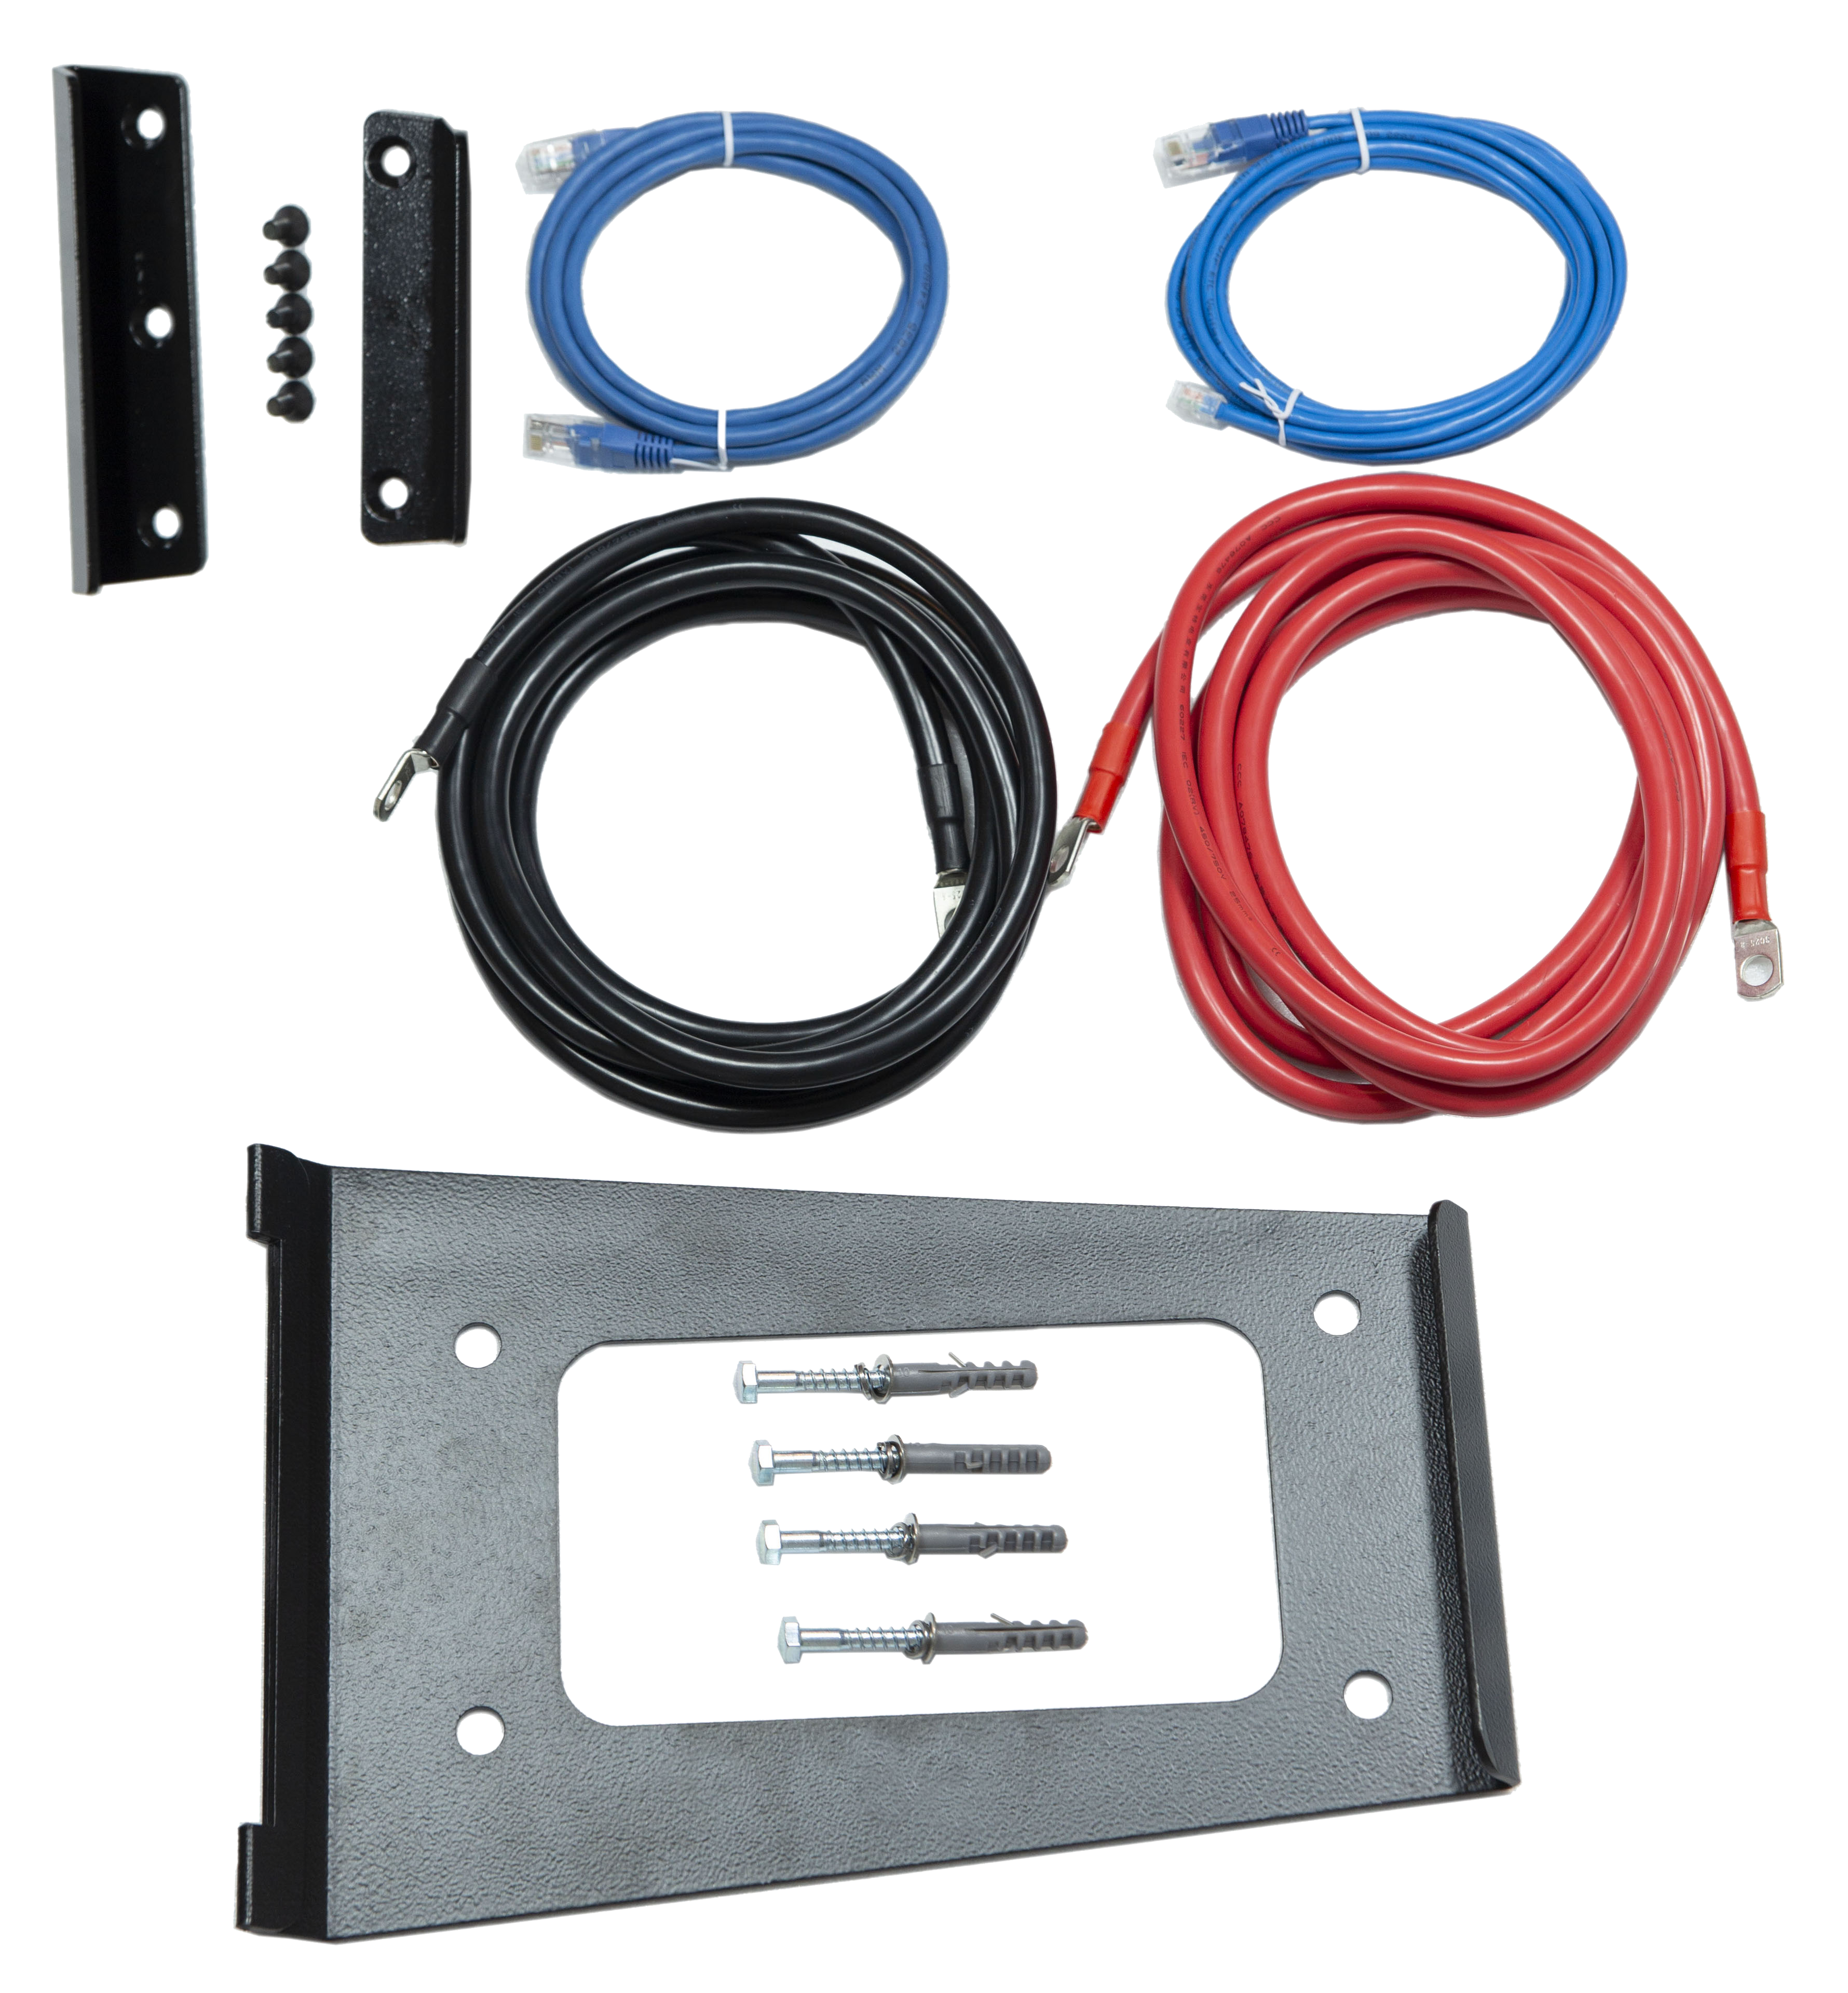 Weco LV Installation kit for 5K3-LV/HV, incl. bracket, LV + coms cables